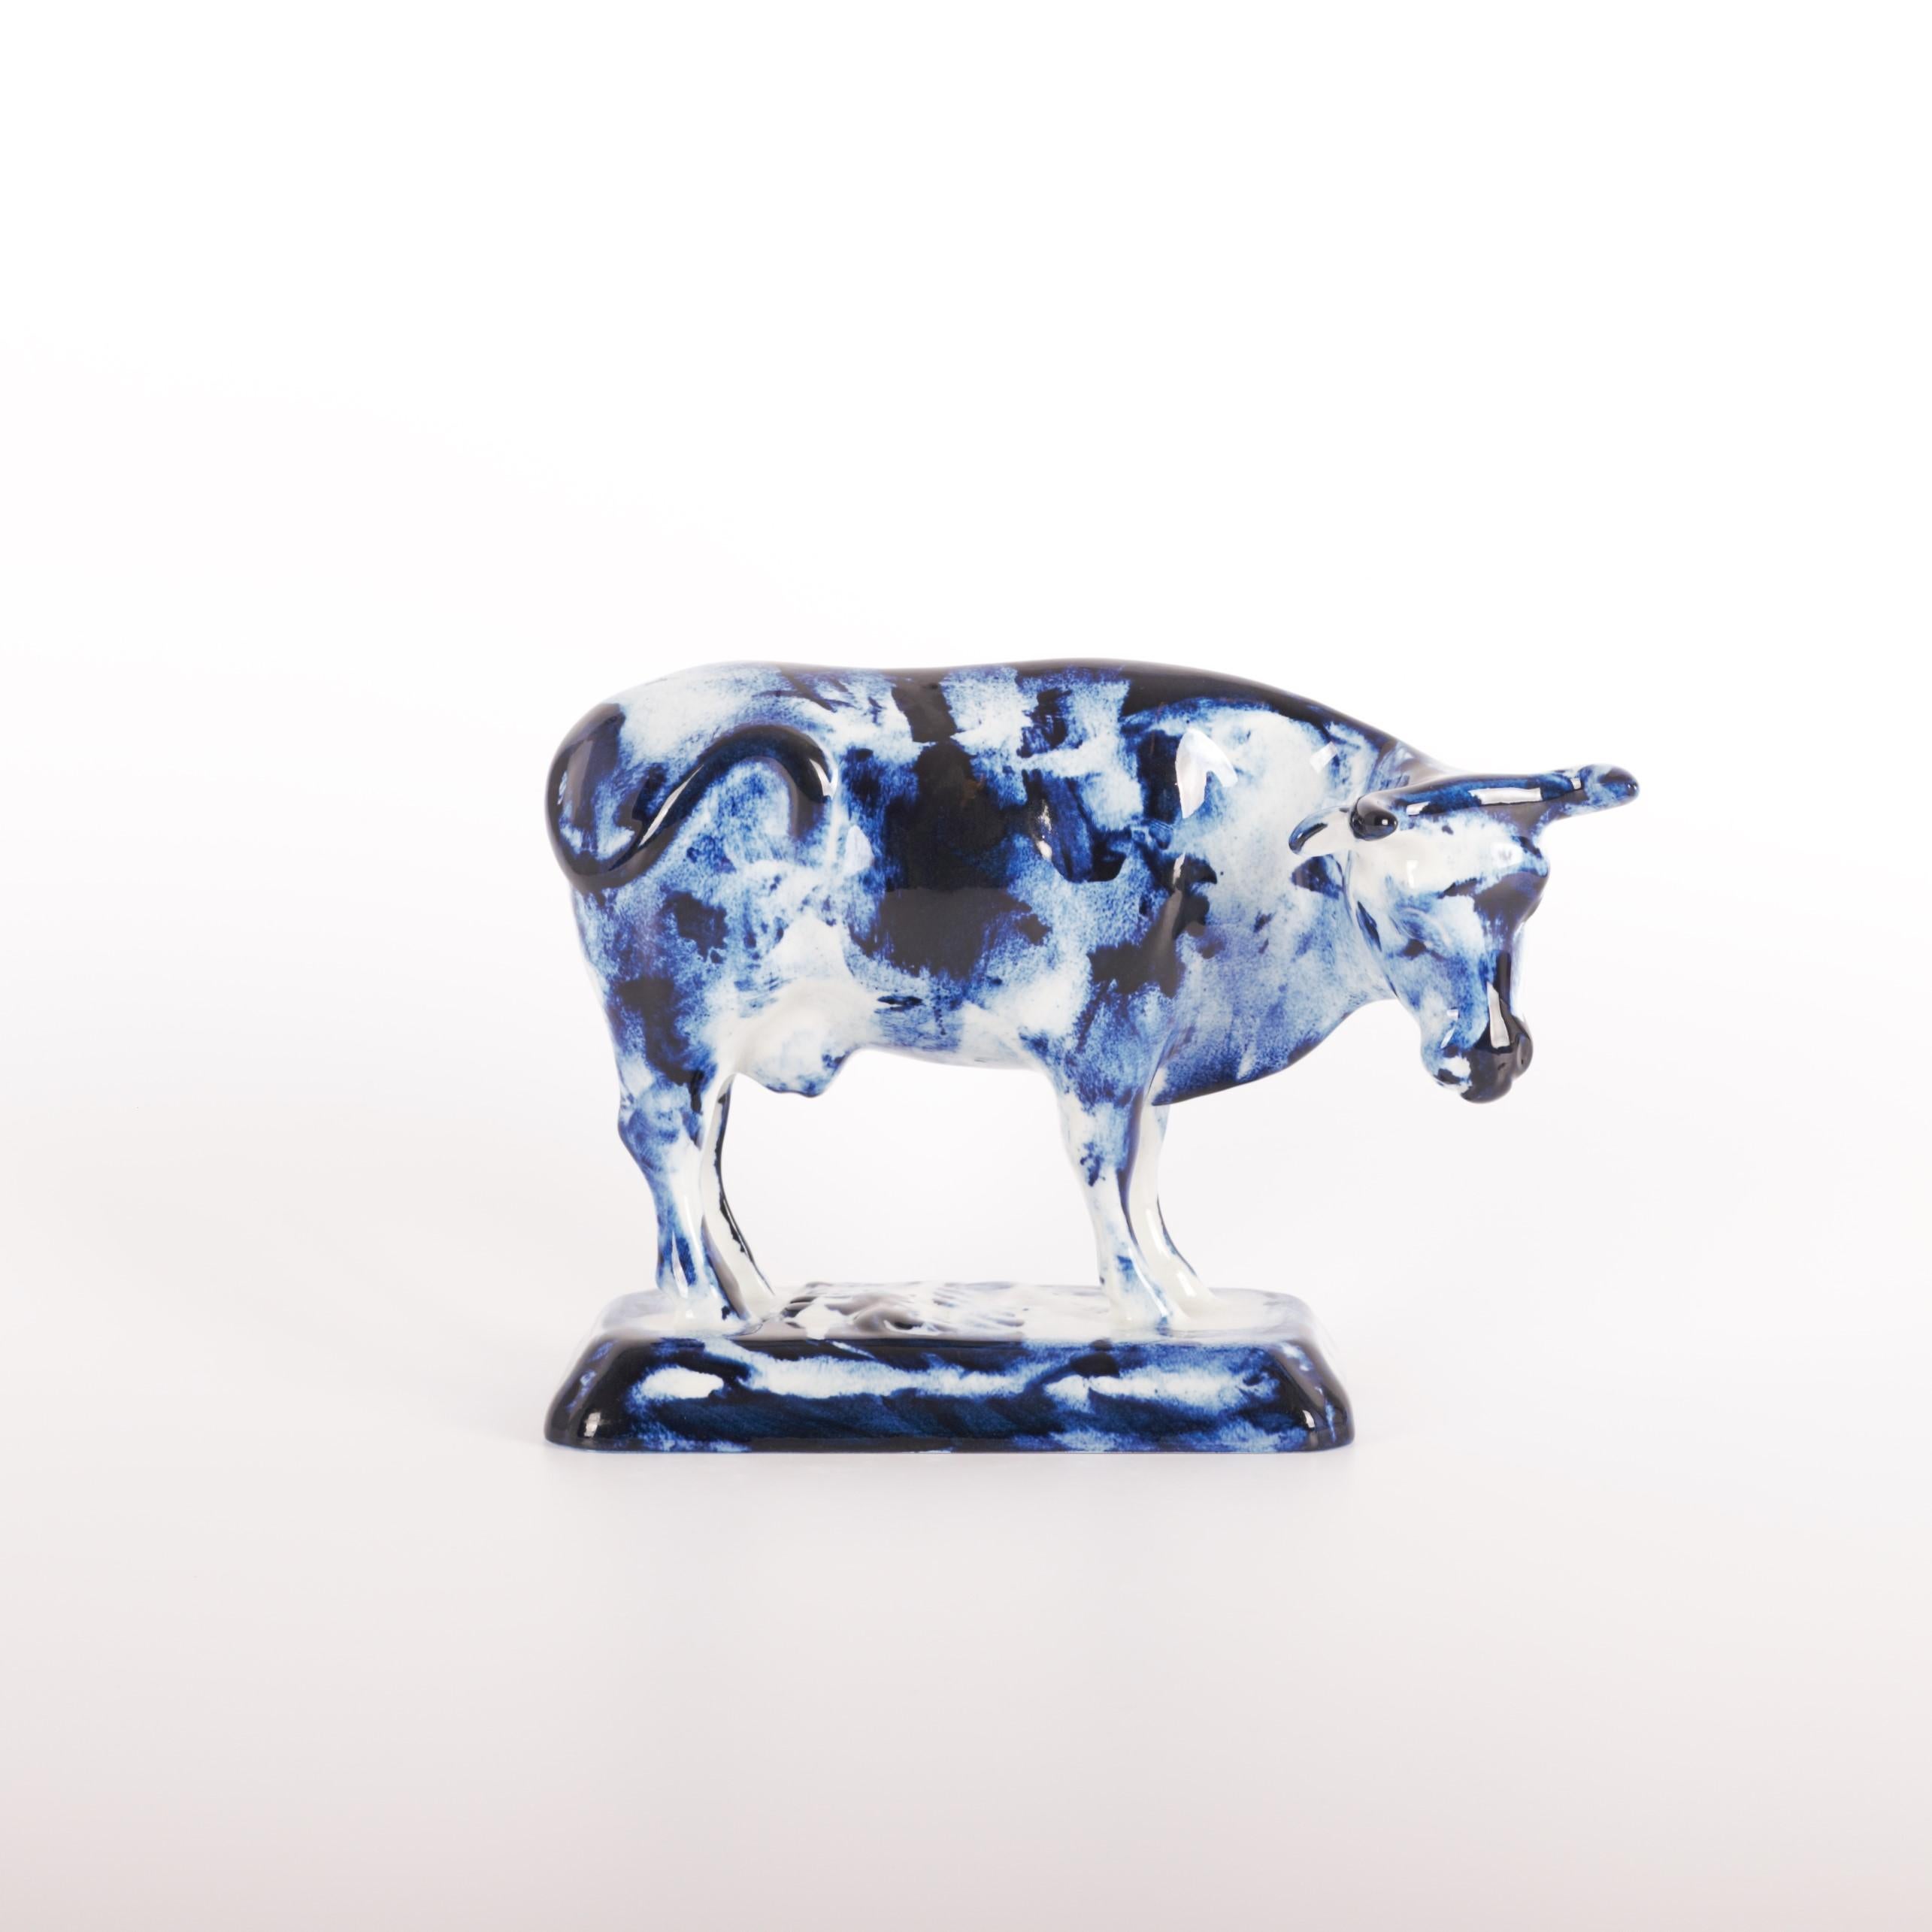 Dutch Delft Blue Cow #1, by Marcel Wanders, Hand Painted, 2006, Unique For Sale